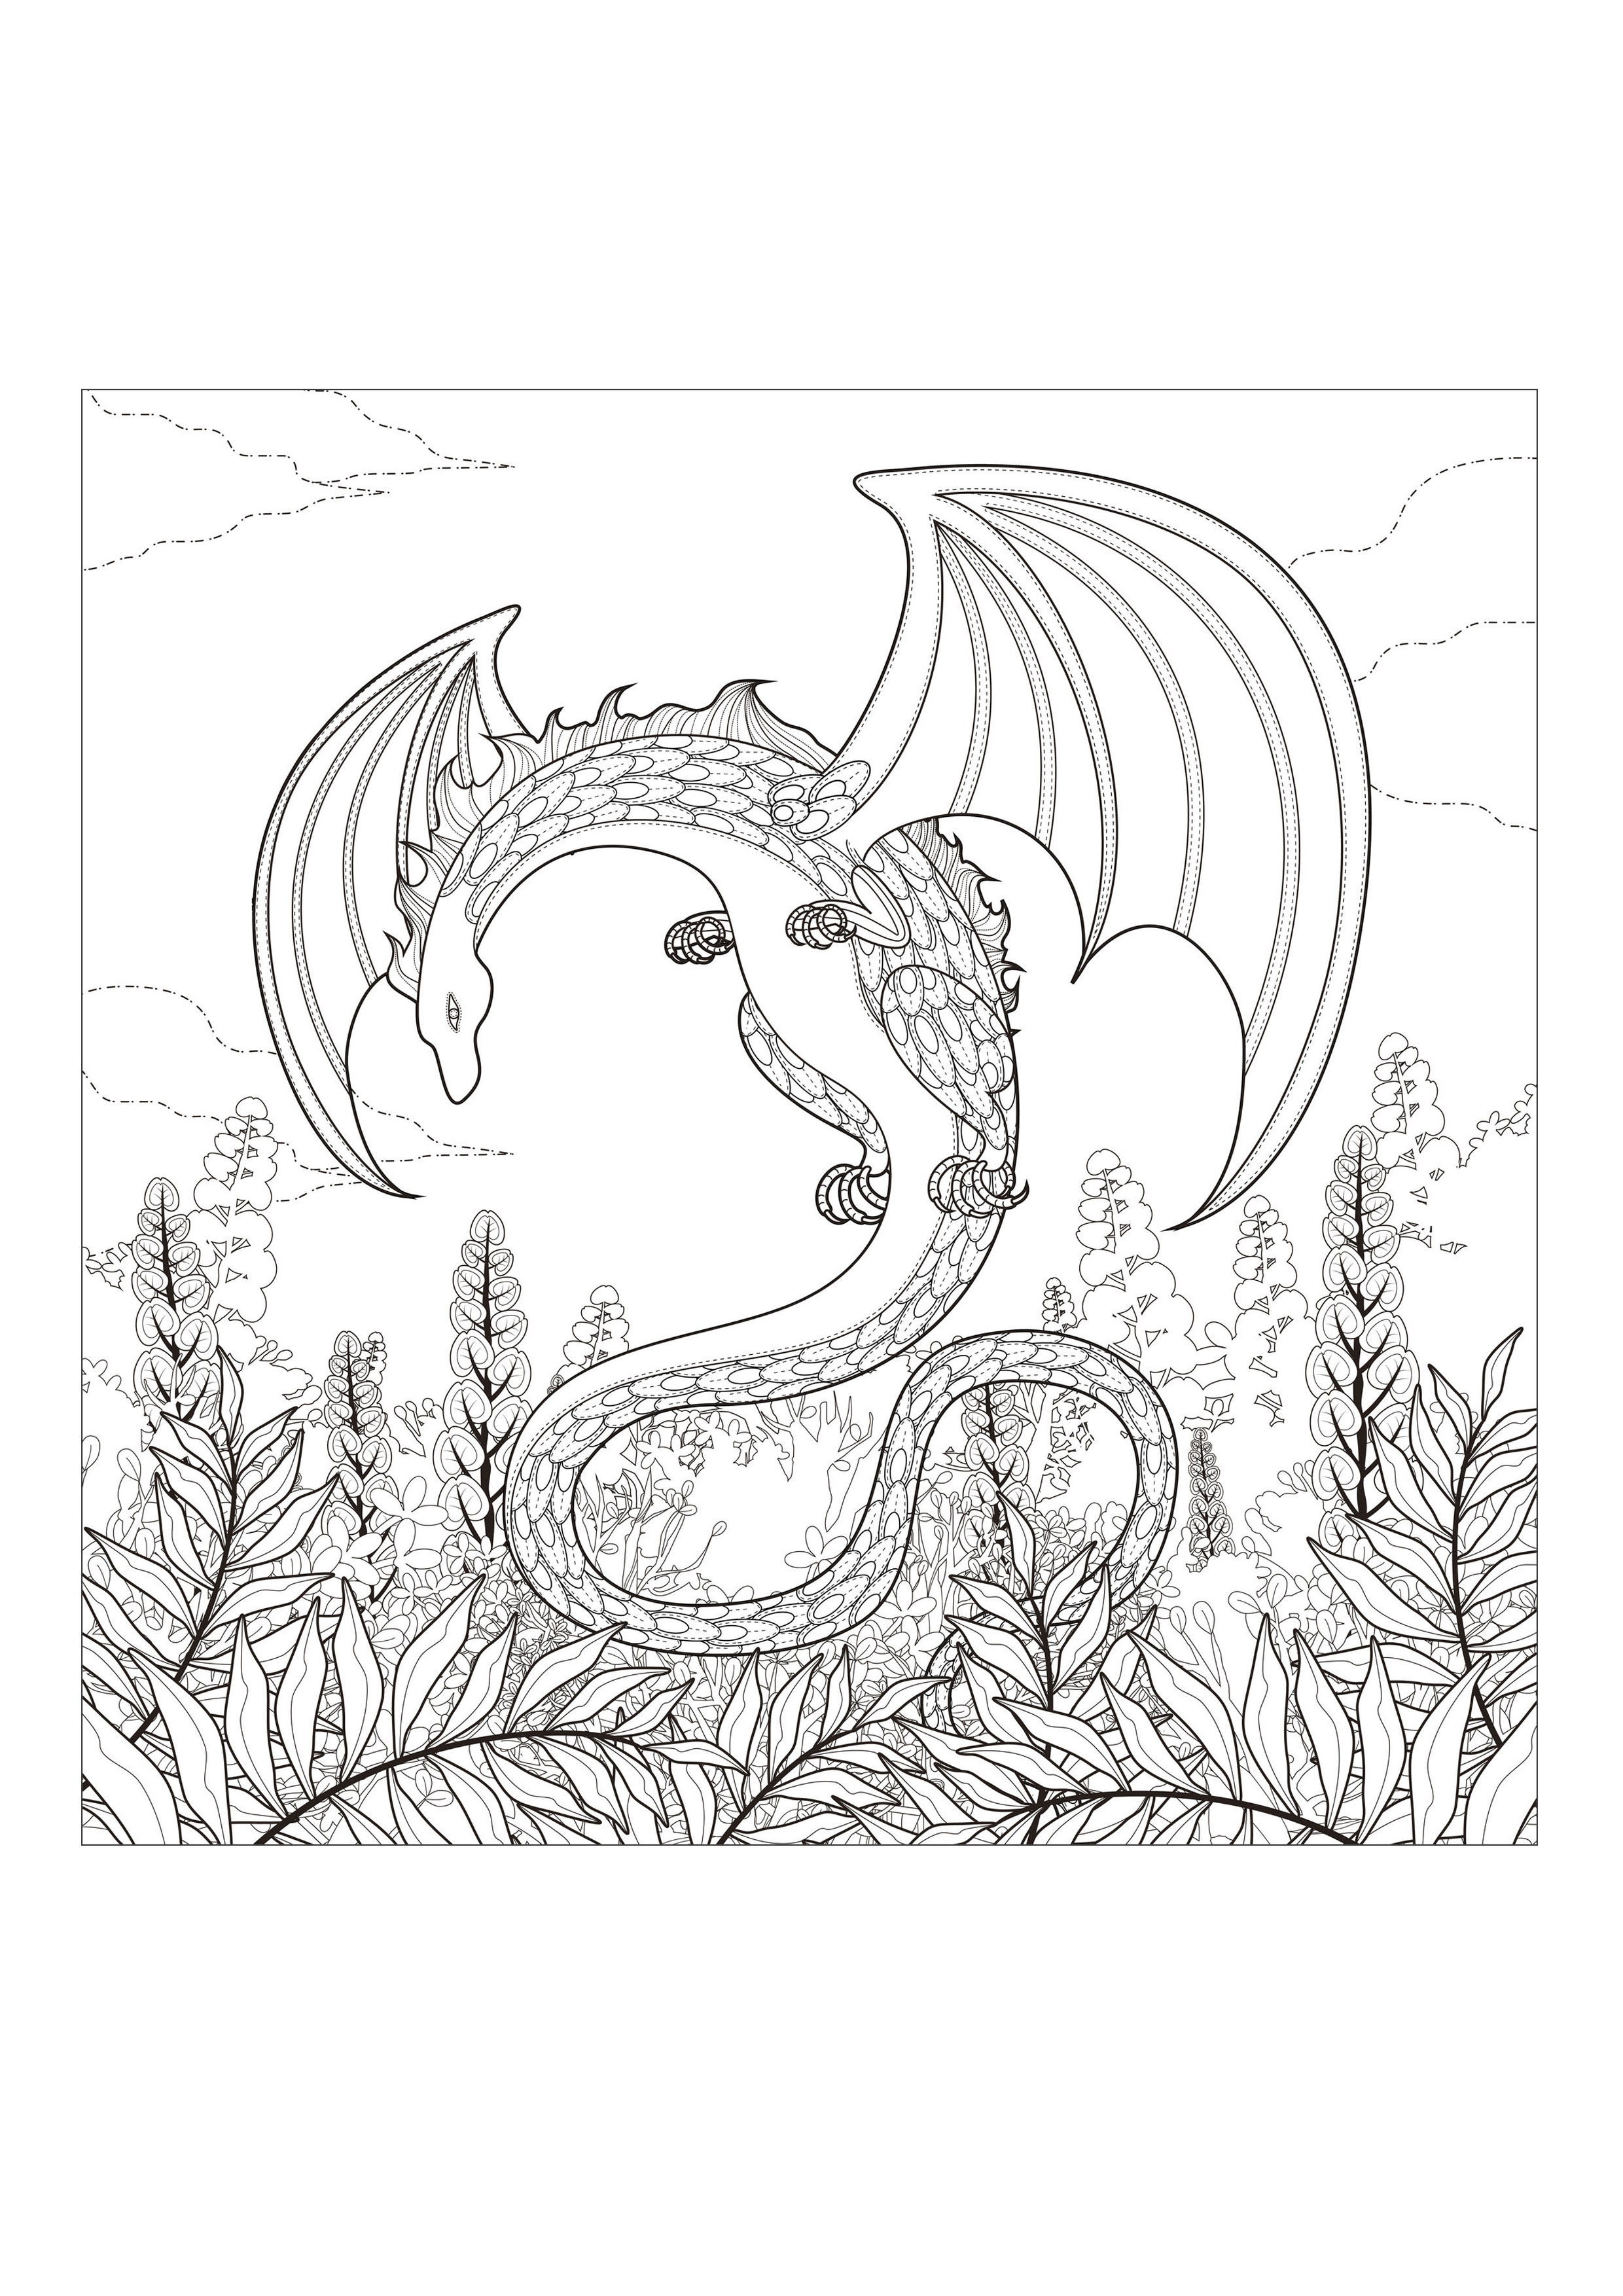 Acreditas em dragões?, Artista : Kchung